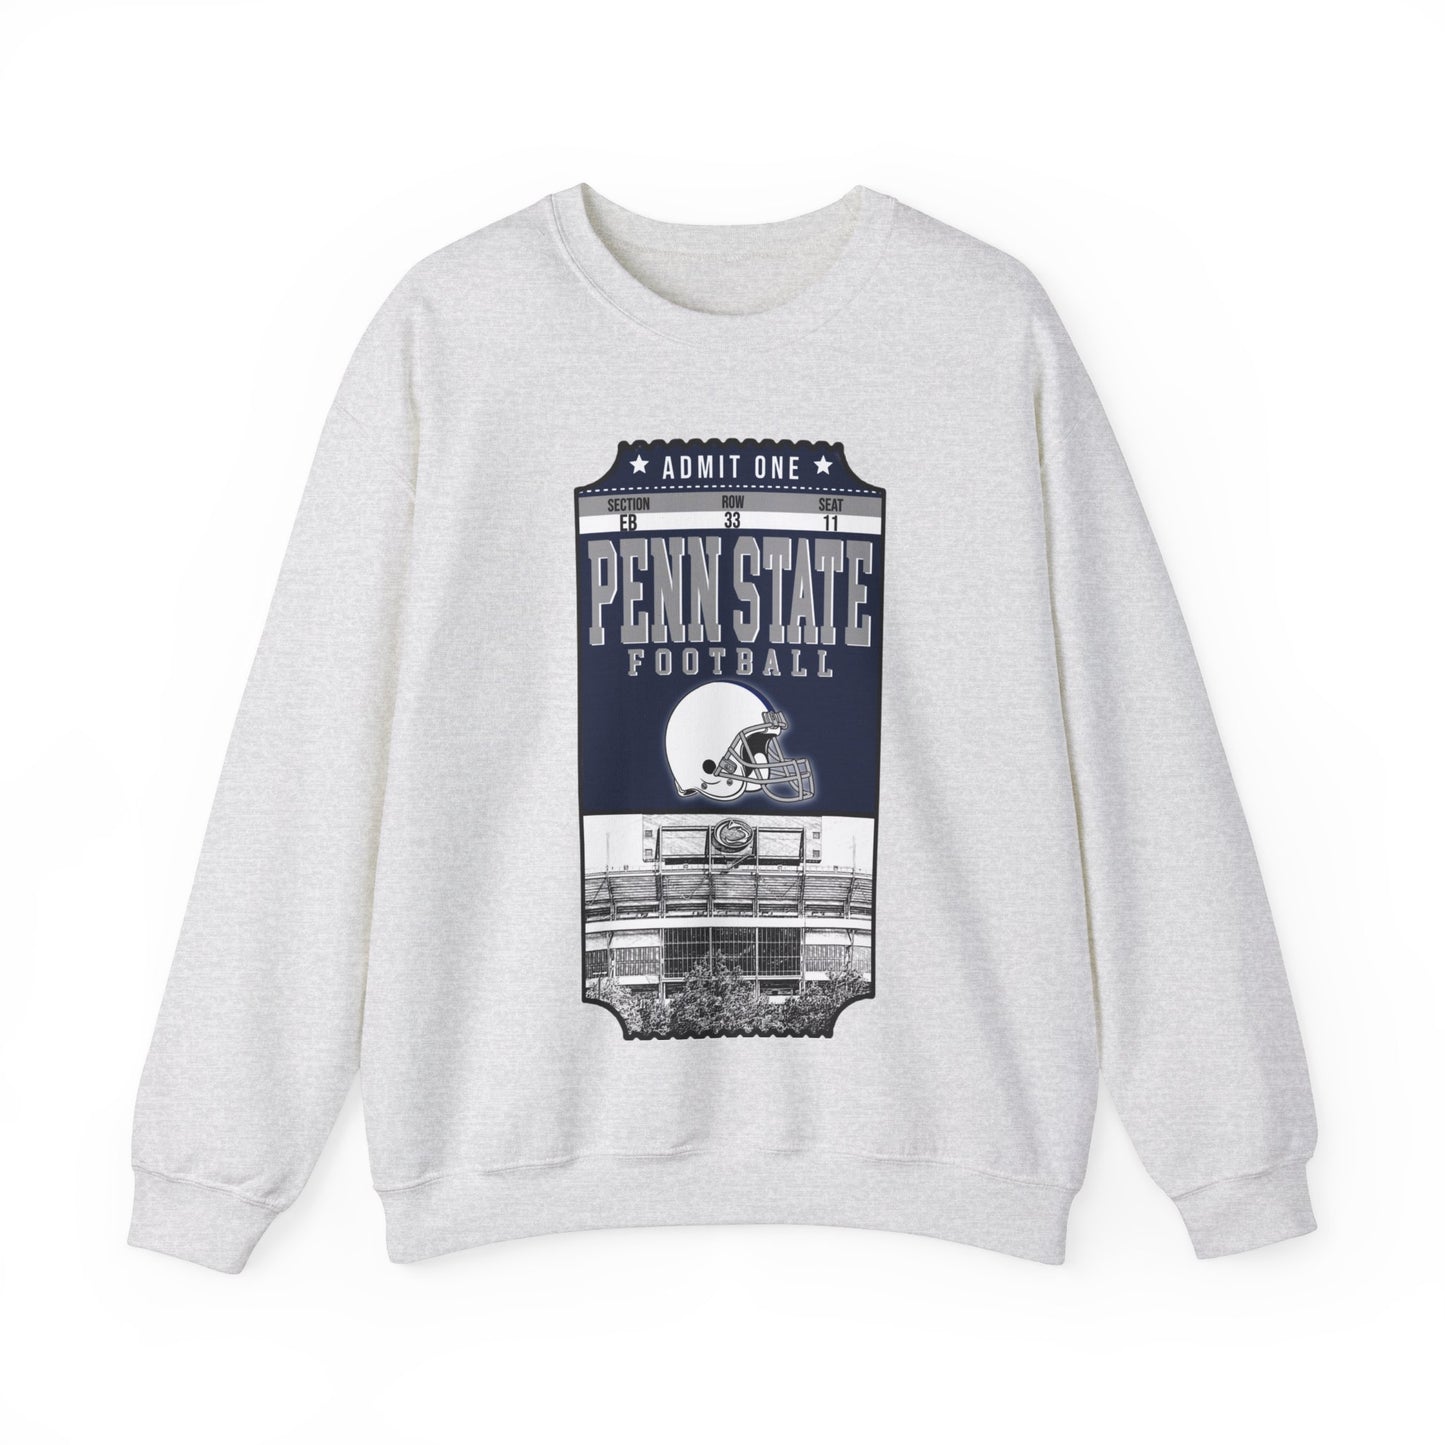 Penn State Football Sweatshirt